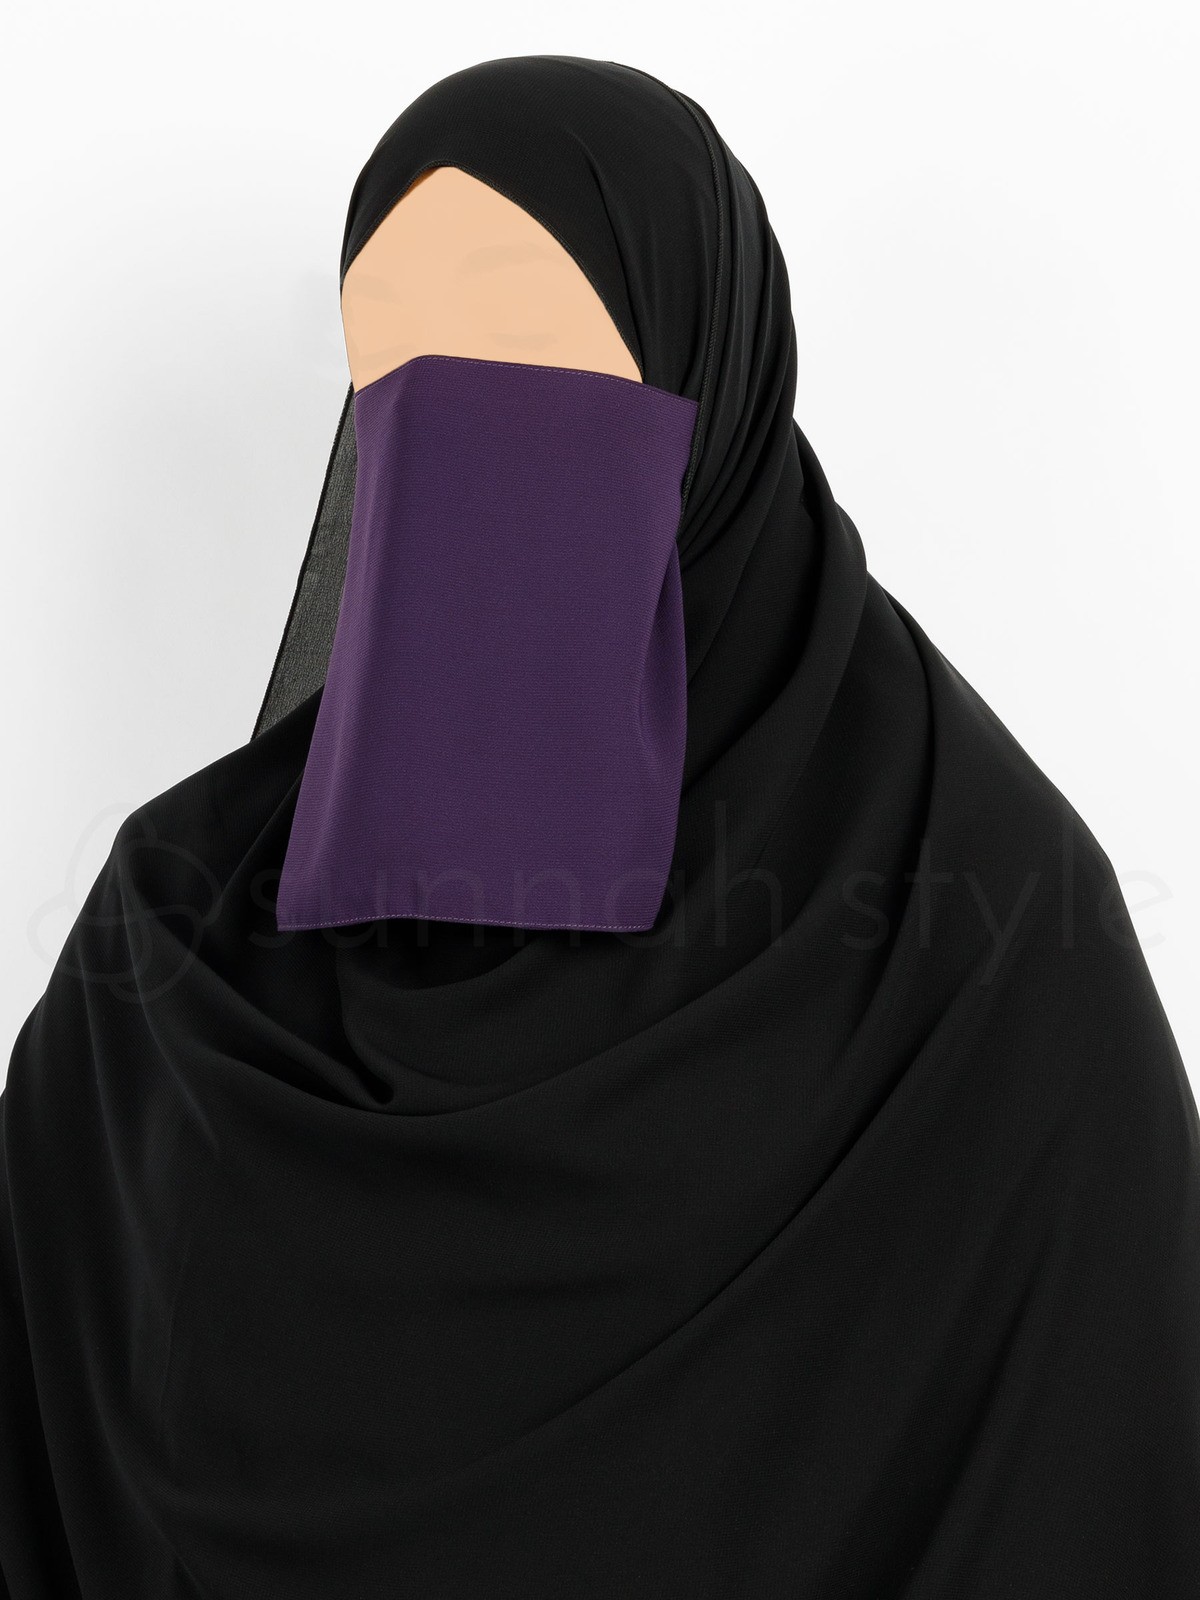 Sunnah Style - Short Elastic Half Niqab (Violet)